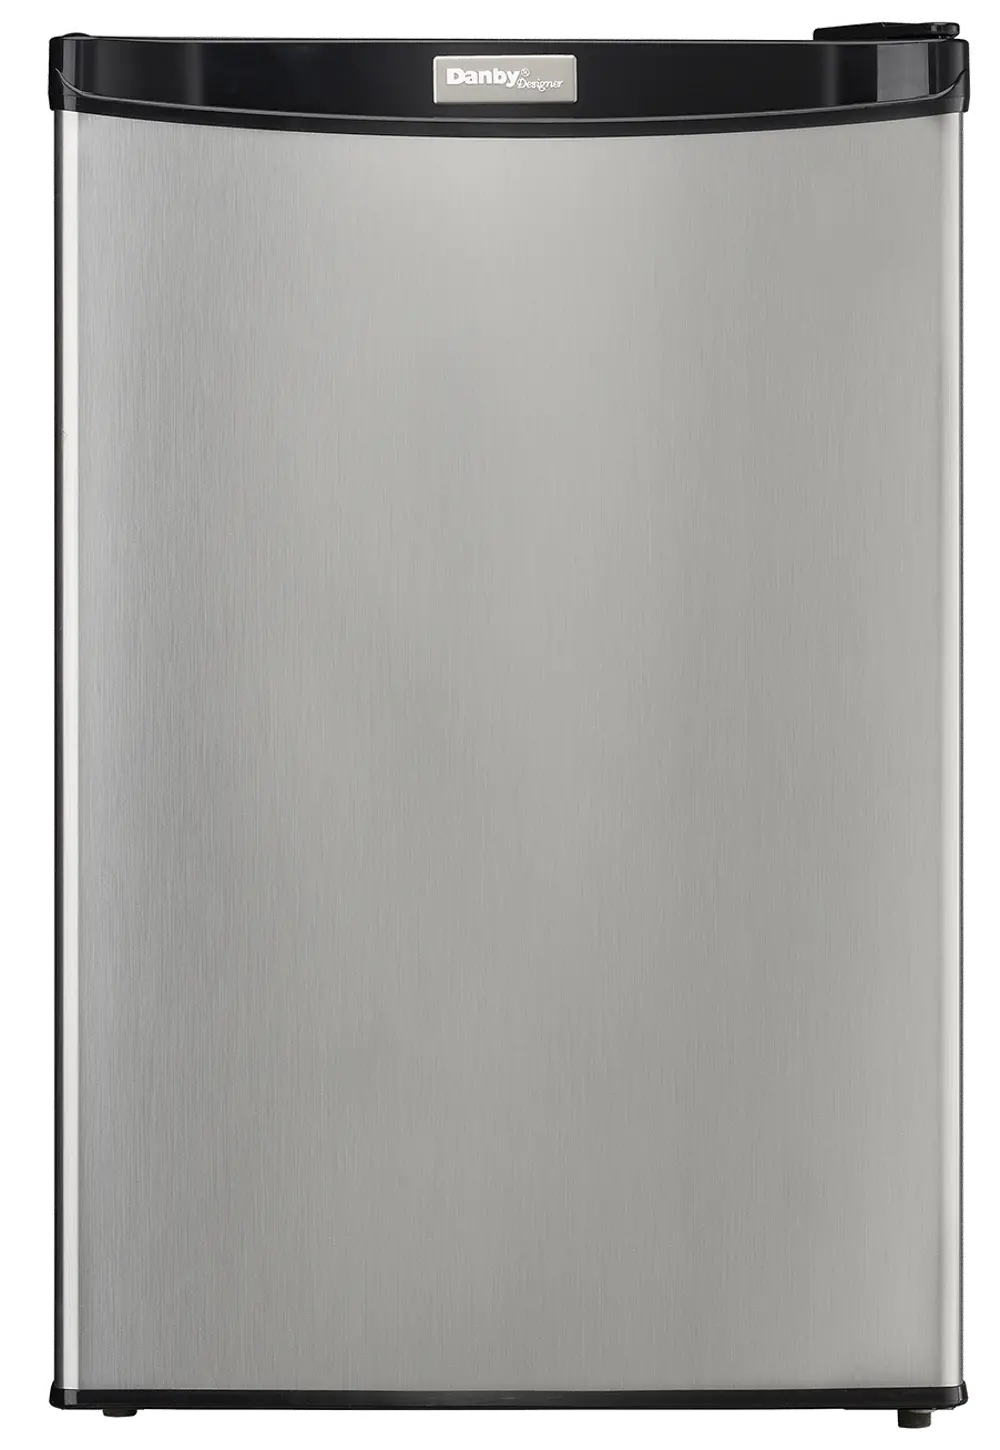 DCR044B1SLM Danby Diplomat Compact Refrigerator - 4.4 cu. ft., Stainless Steel-1